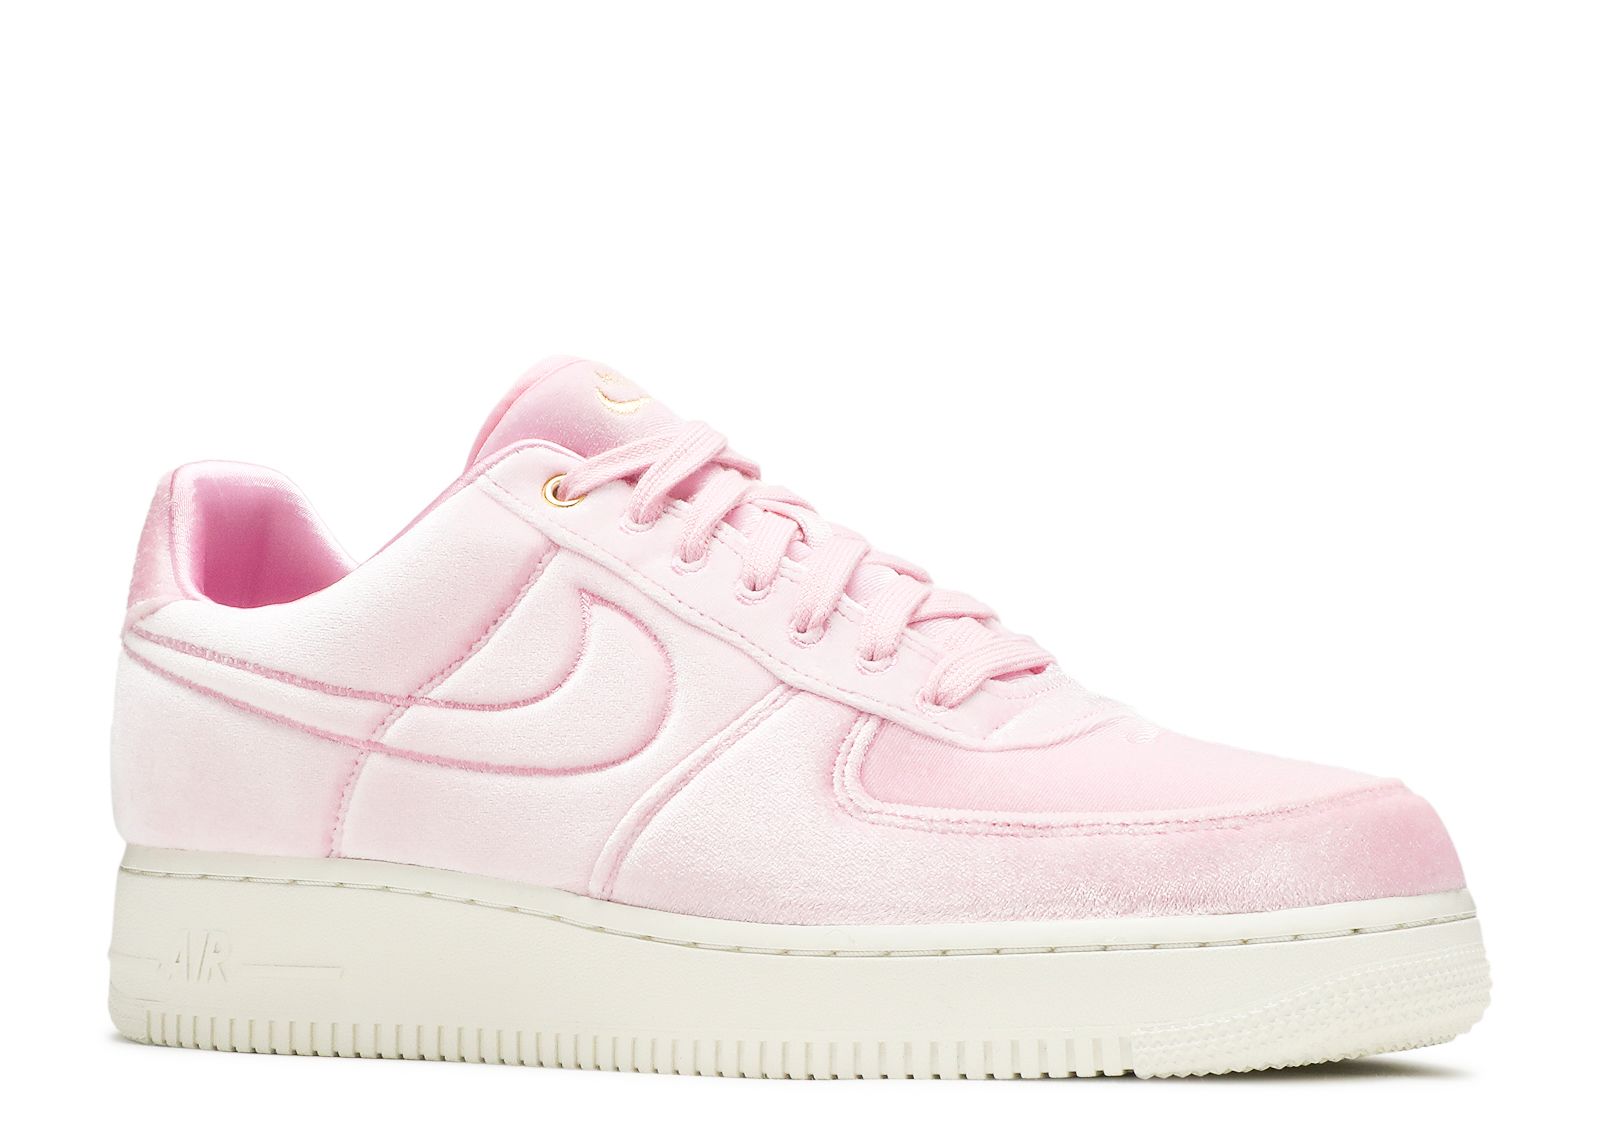 Nike Air Force 1 Low Pink/Metallic Silver Sneakers Size Women's 7.5 CJ1646  600